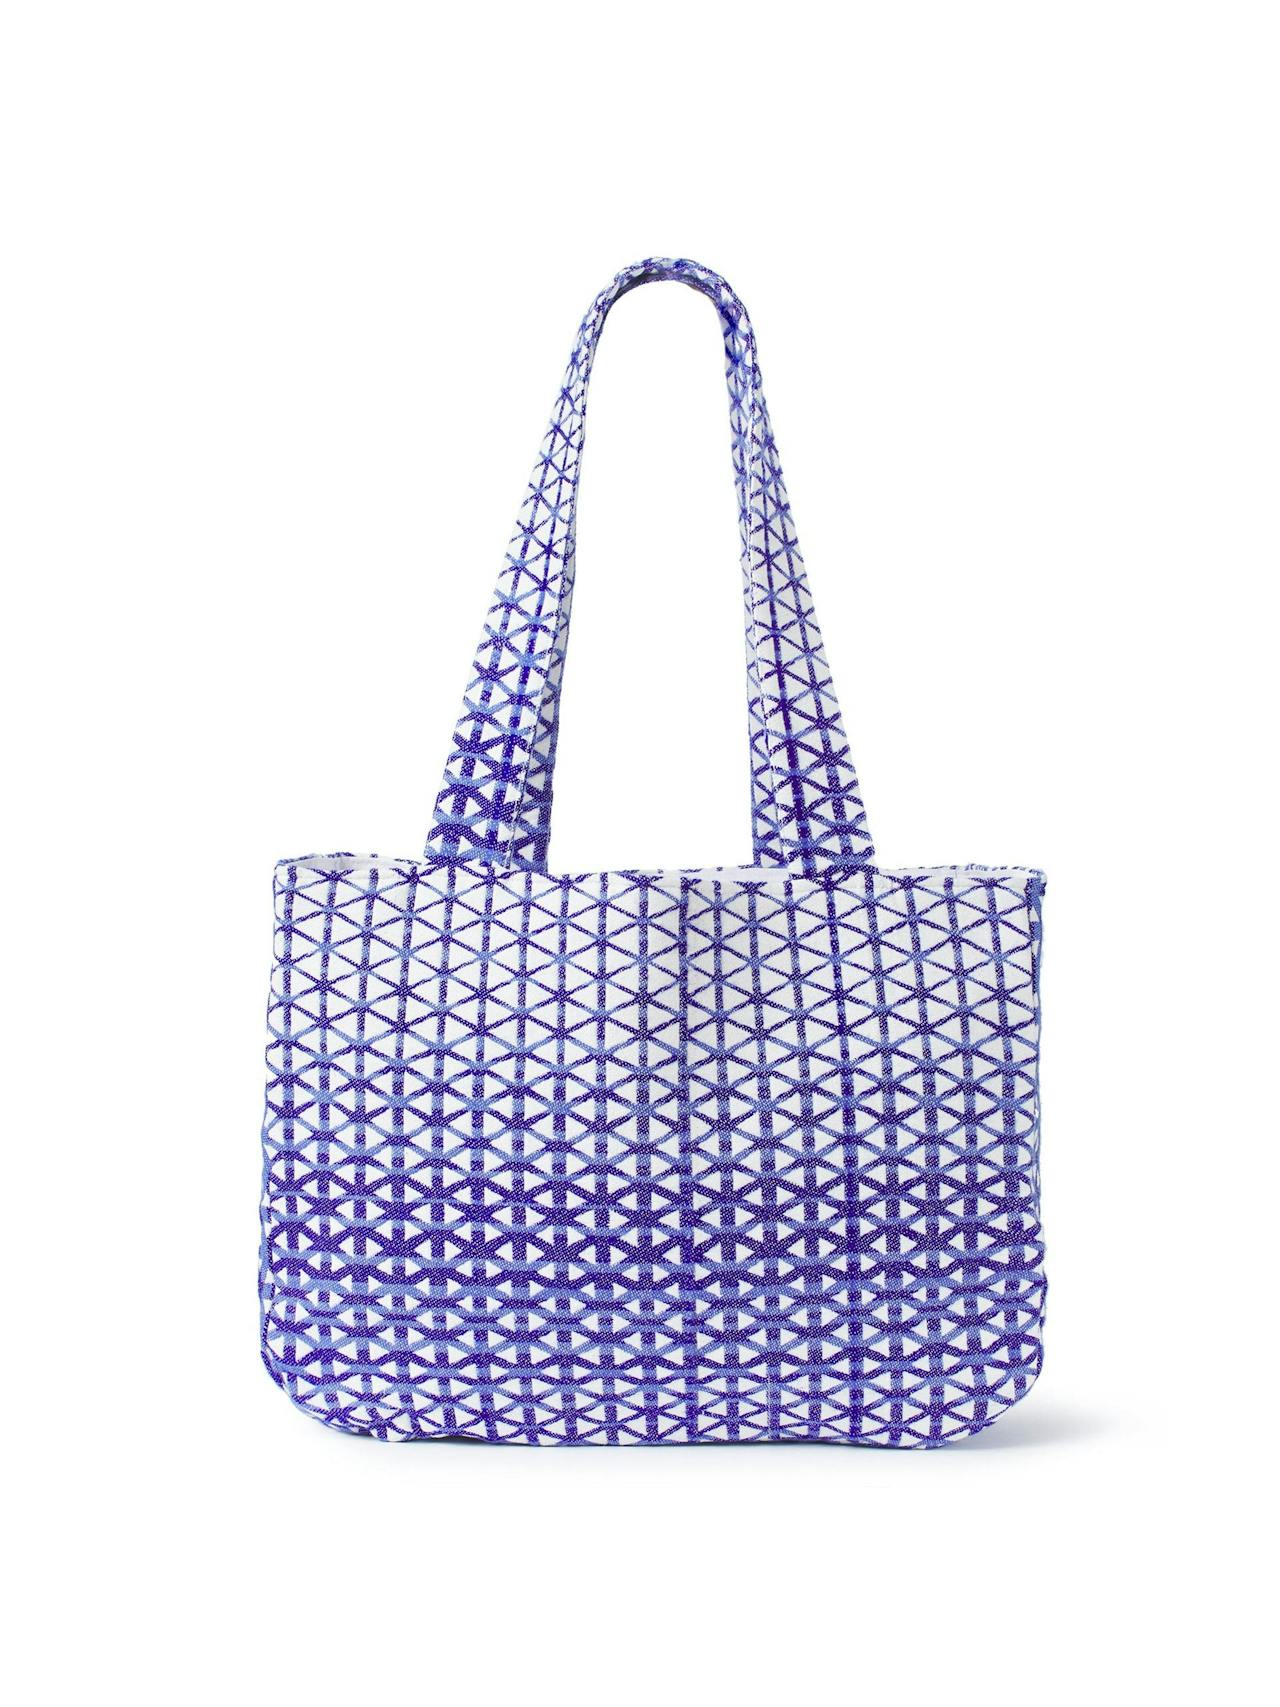 Blue and white jacquard bag